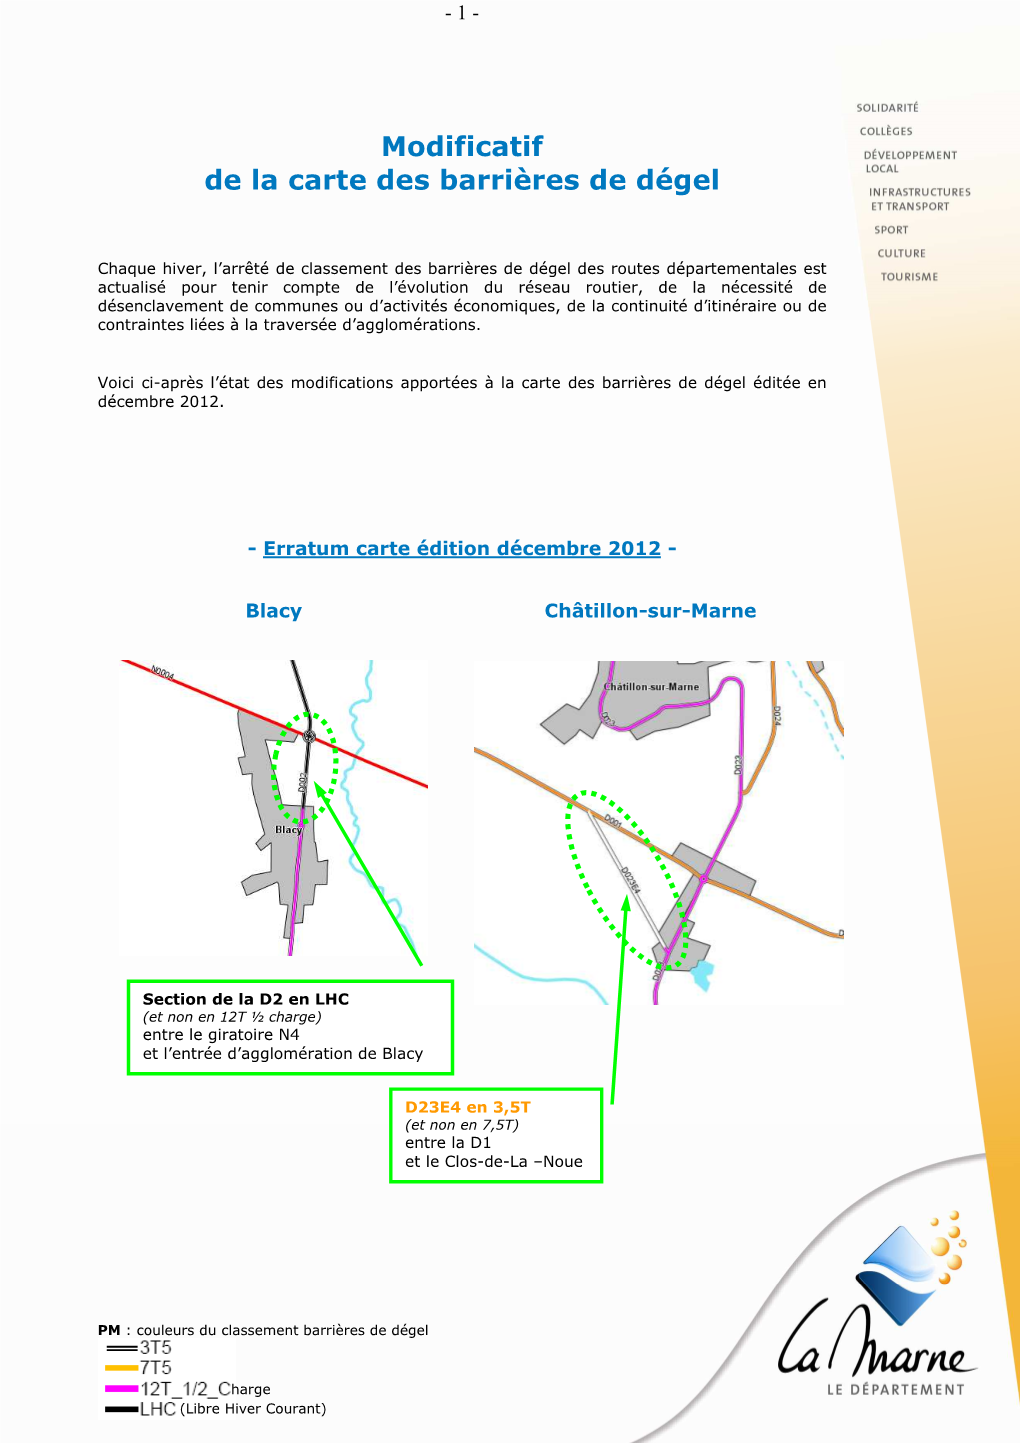 Modificatif De La Carte De Classement Des Barrières De Dégel MAJ Nov 2015